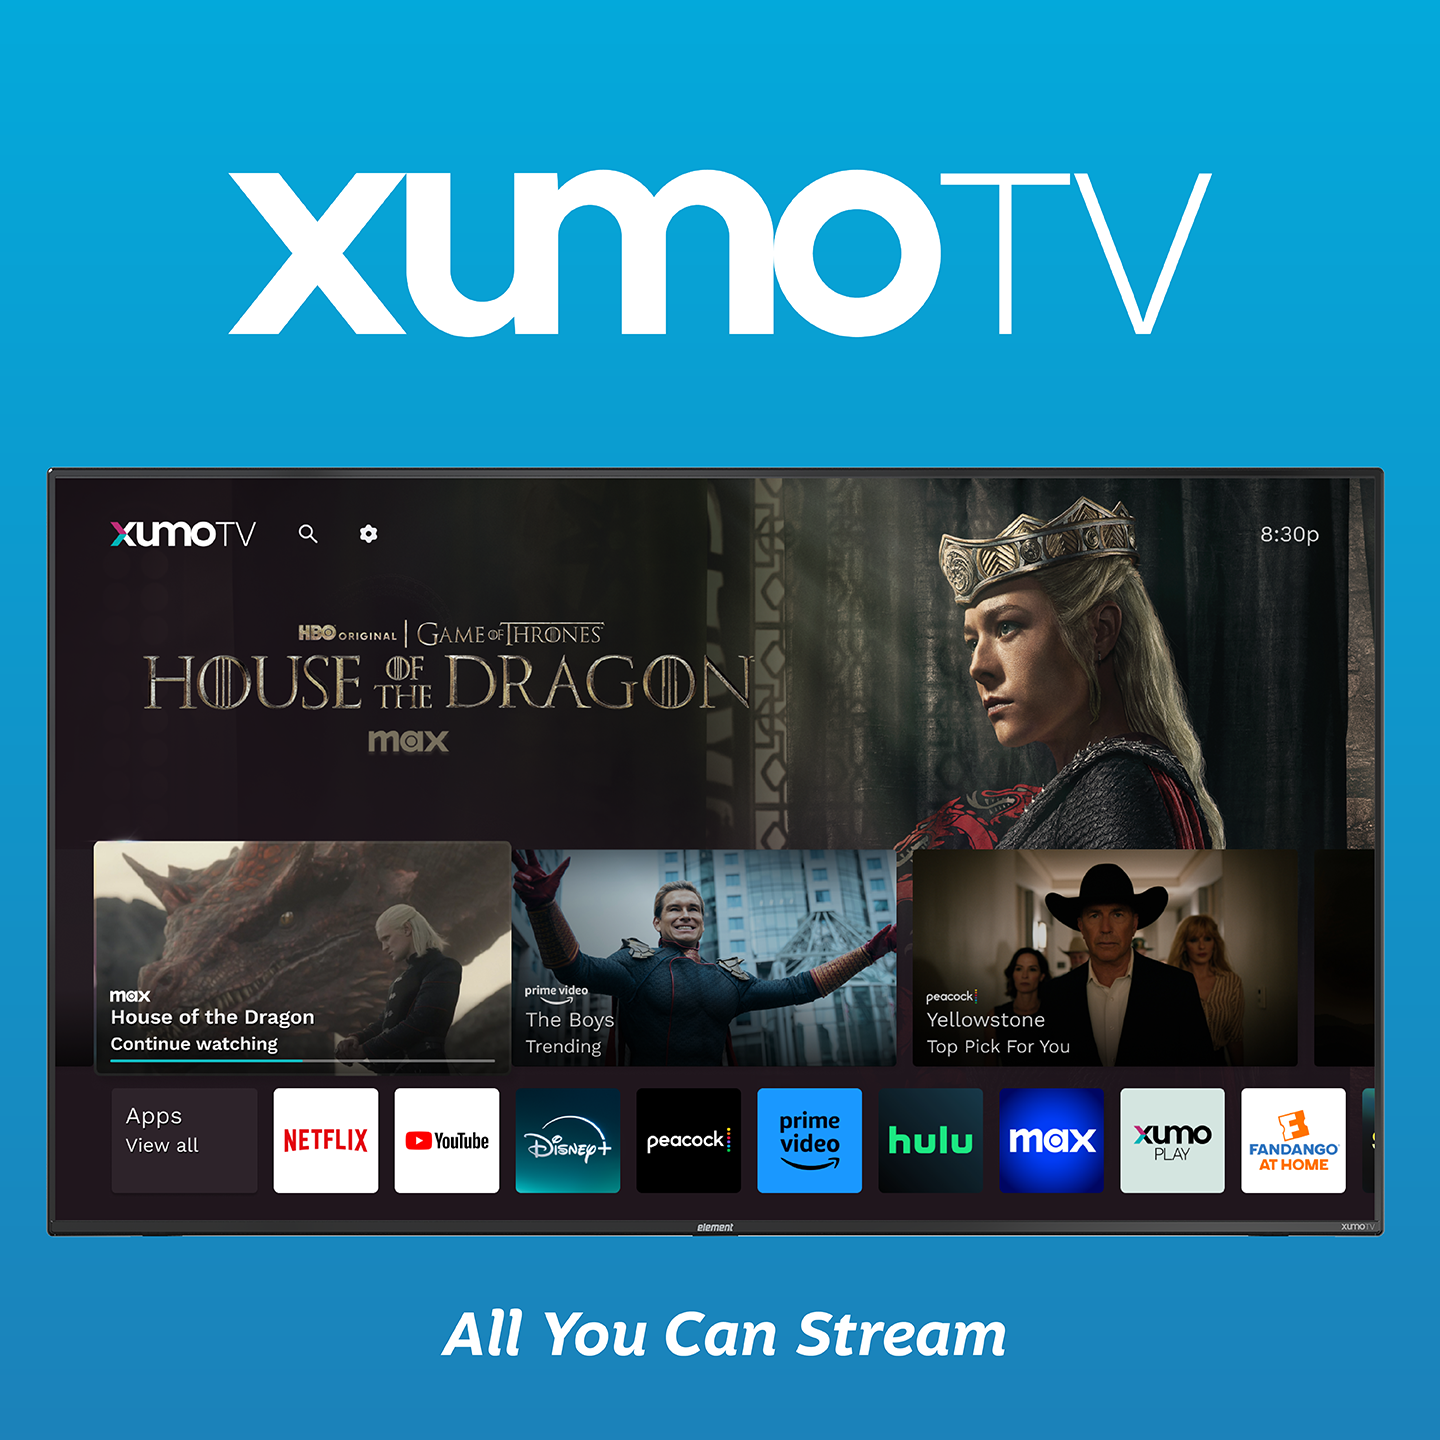 XUMO TV User Experience on TV